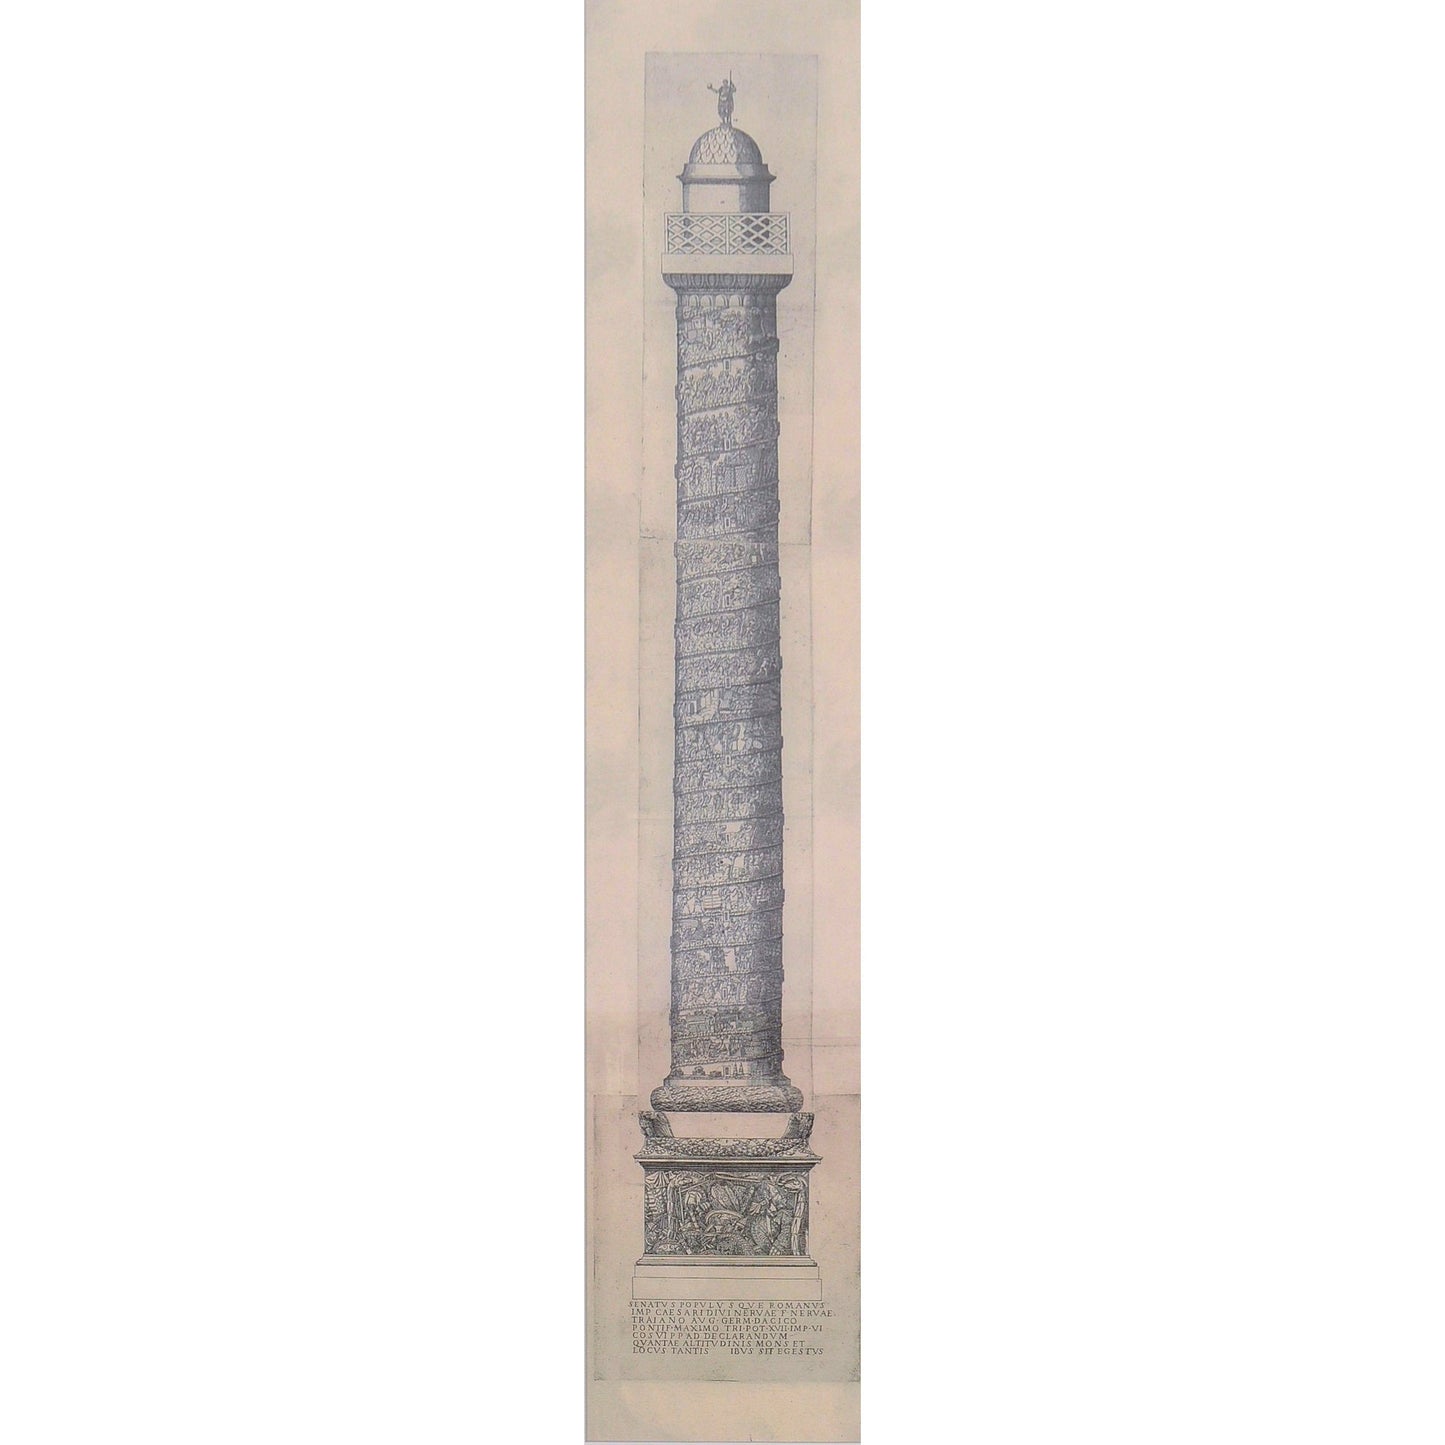 Architectural memorabilia - rare reproductions of engravings of the Louvre and Trajan's Column in Rome - The Memorabilia Club